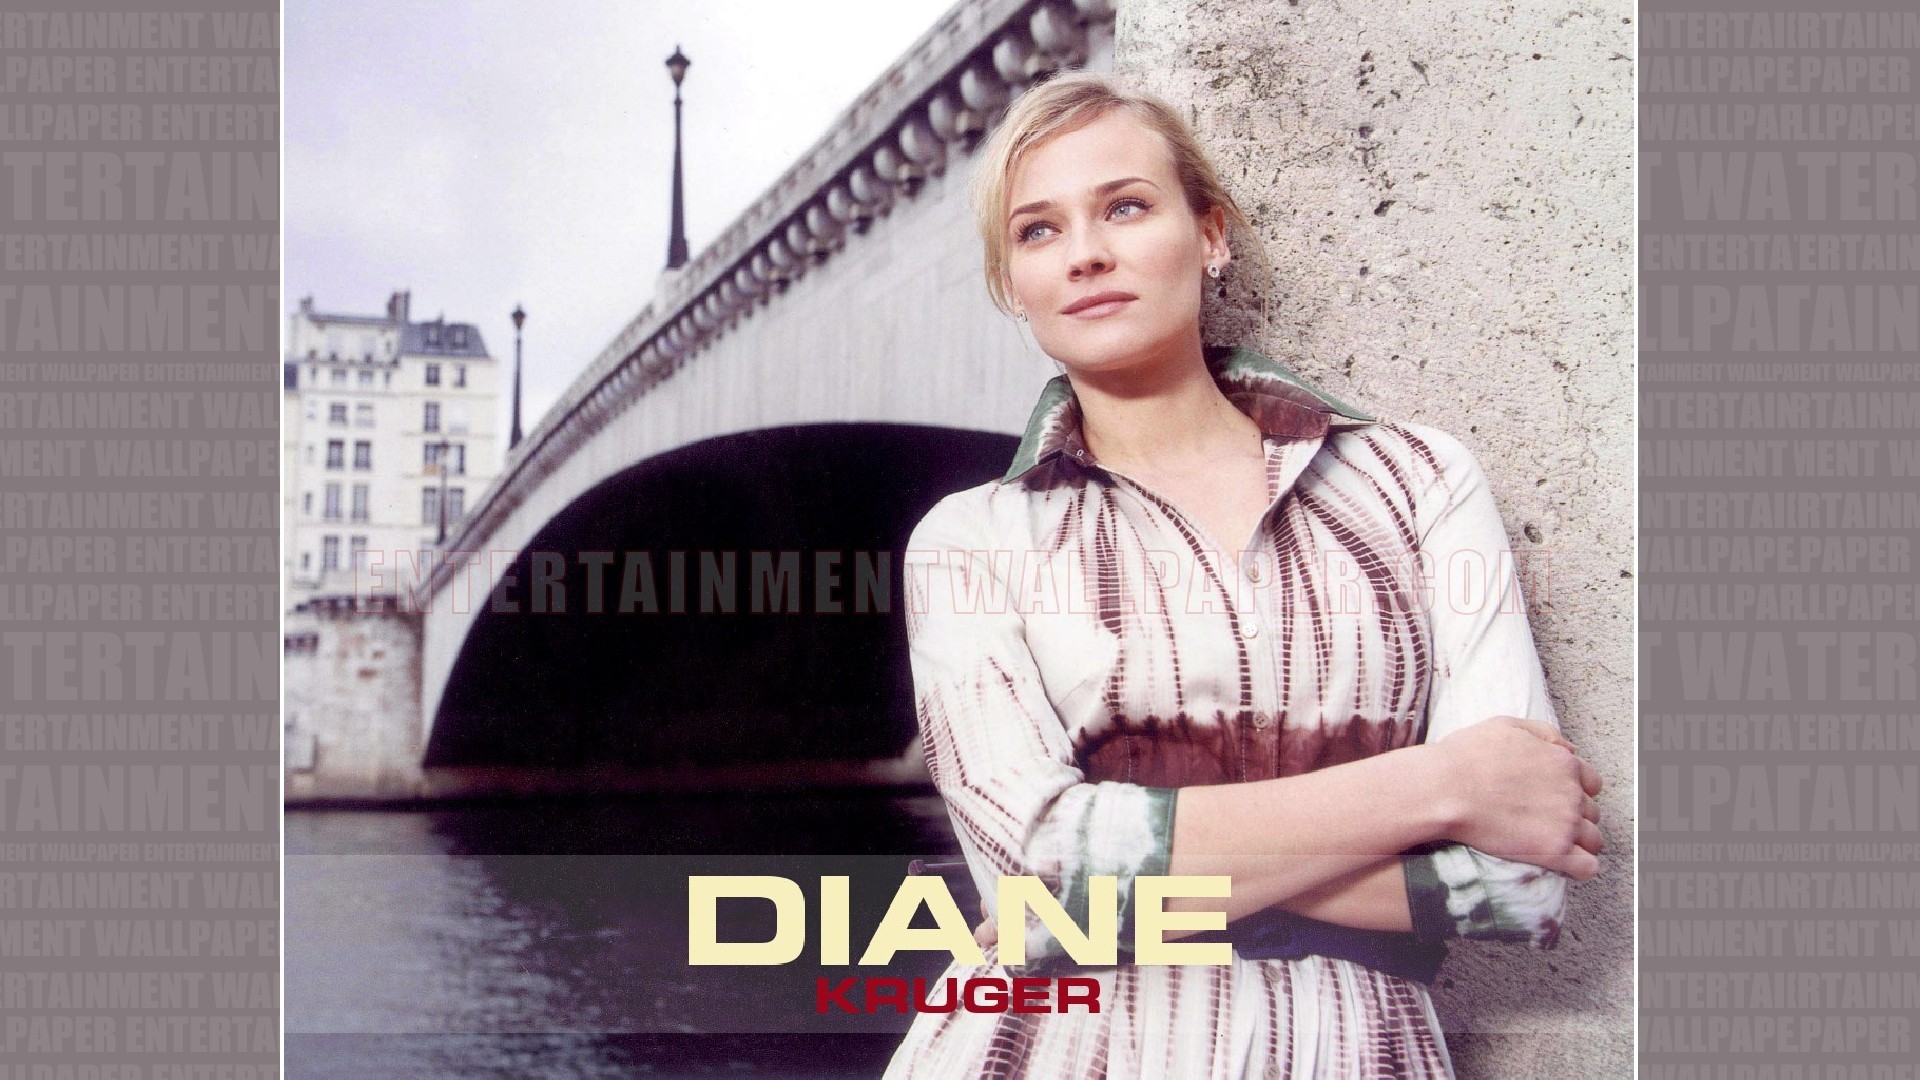 1920x1080 Diane Kruger Wallpaper - Original size, download now.